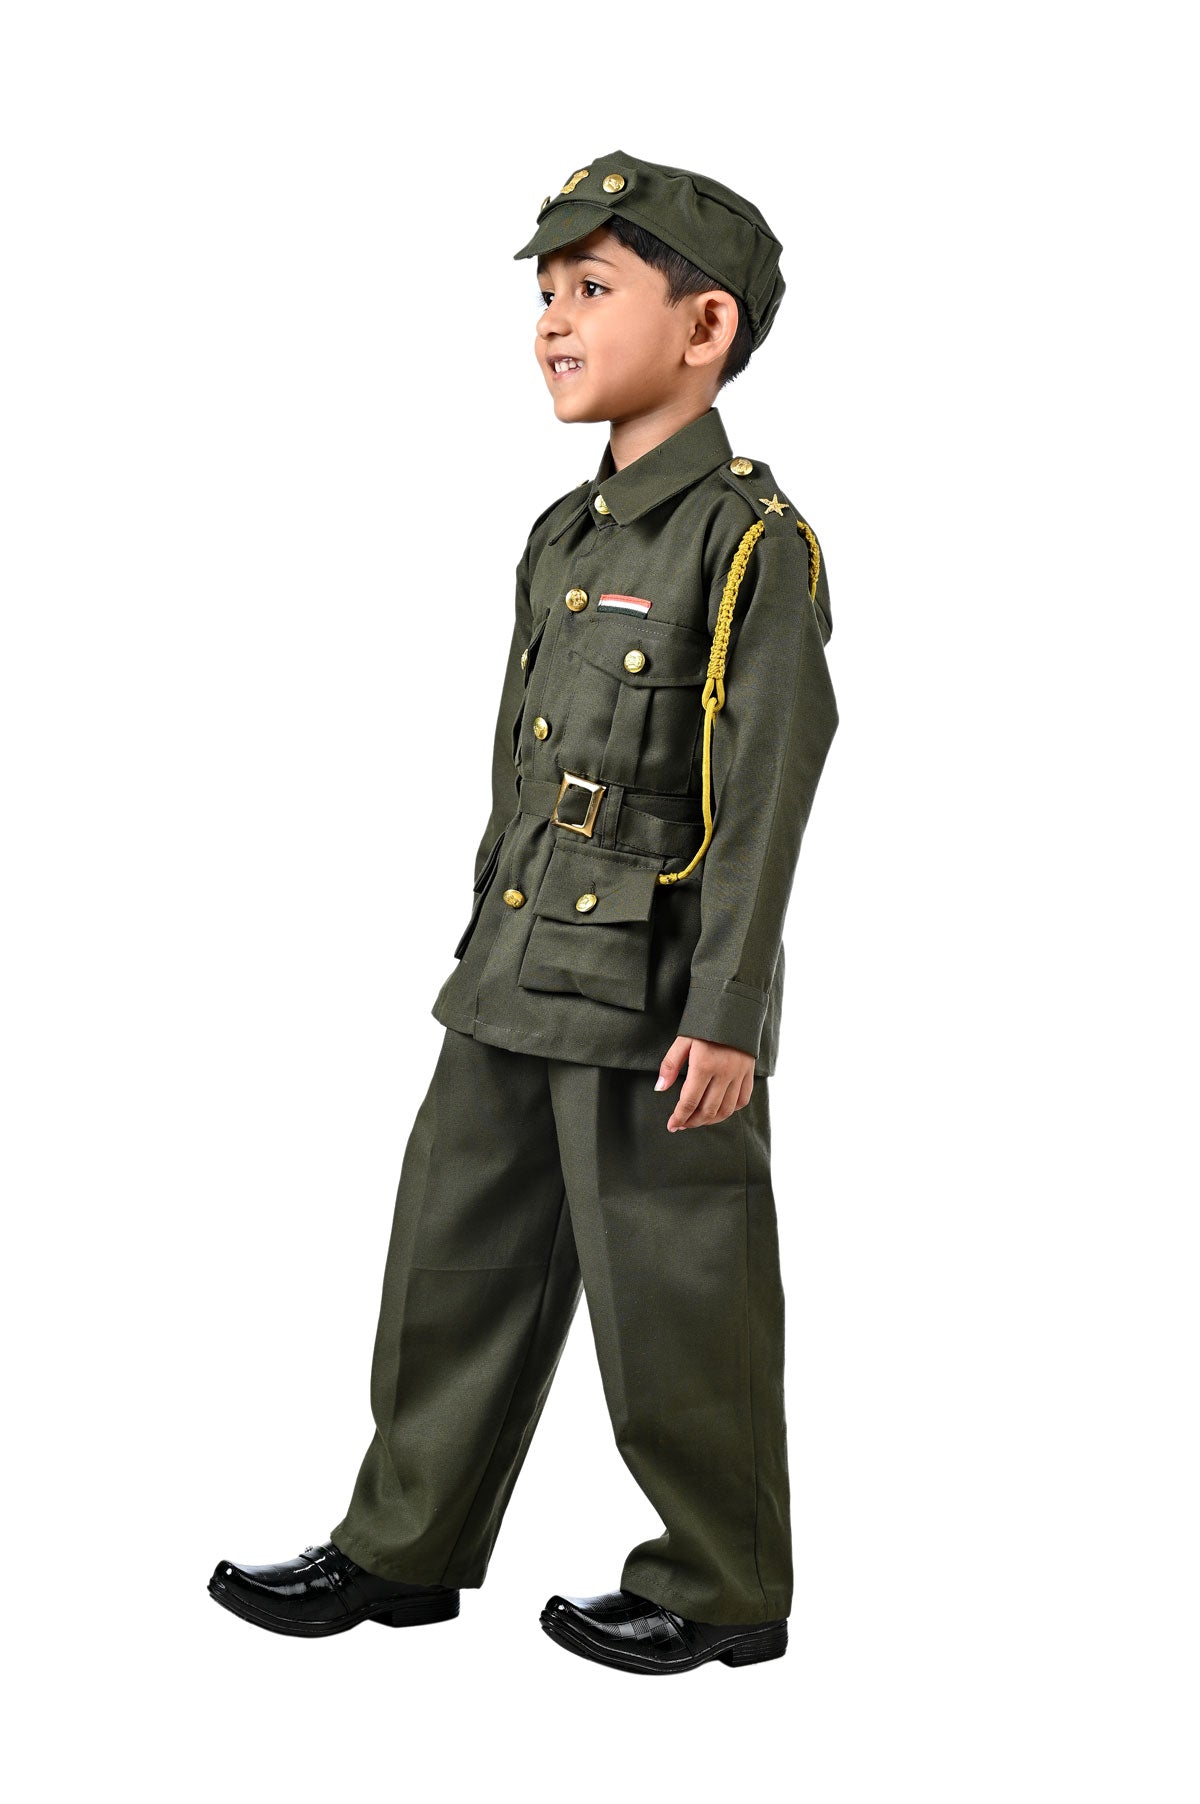 Special Forces Kids Costume Green Camo - Medium - Walmart.com